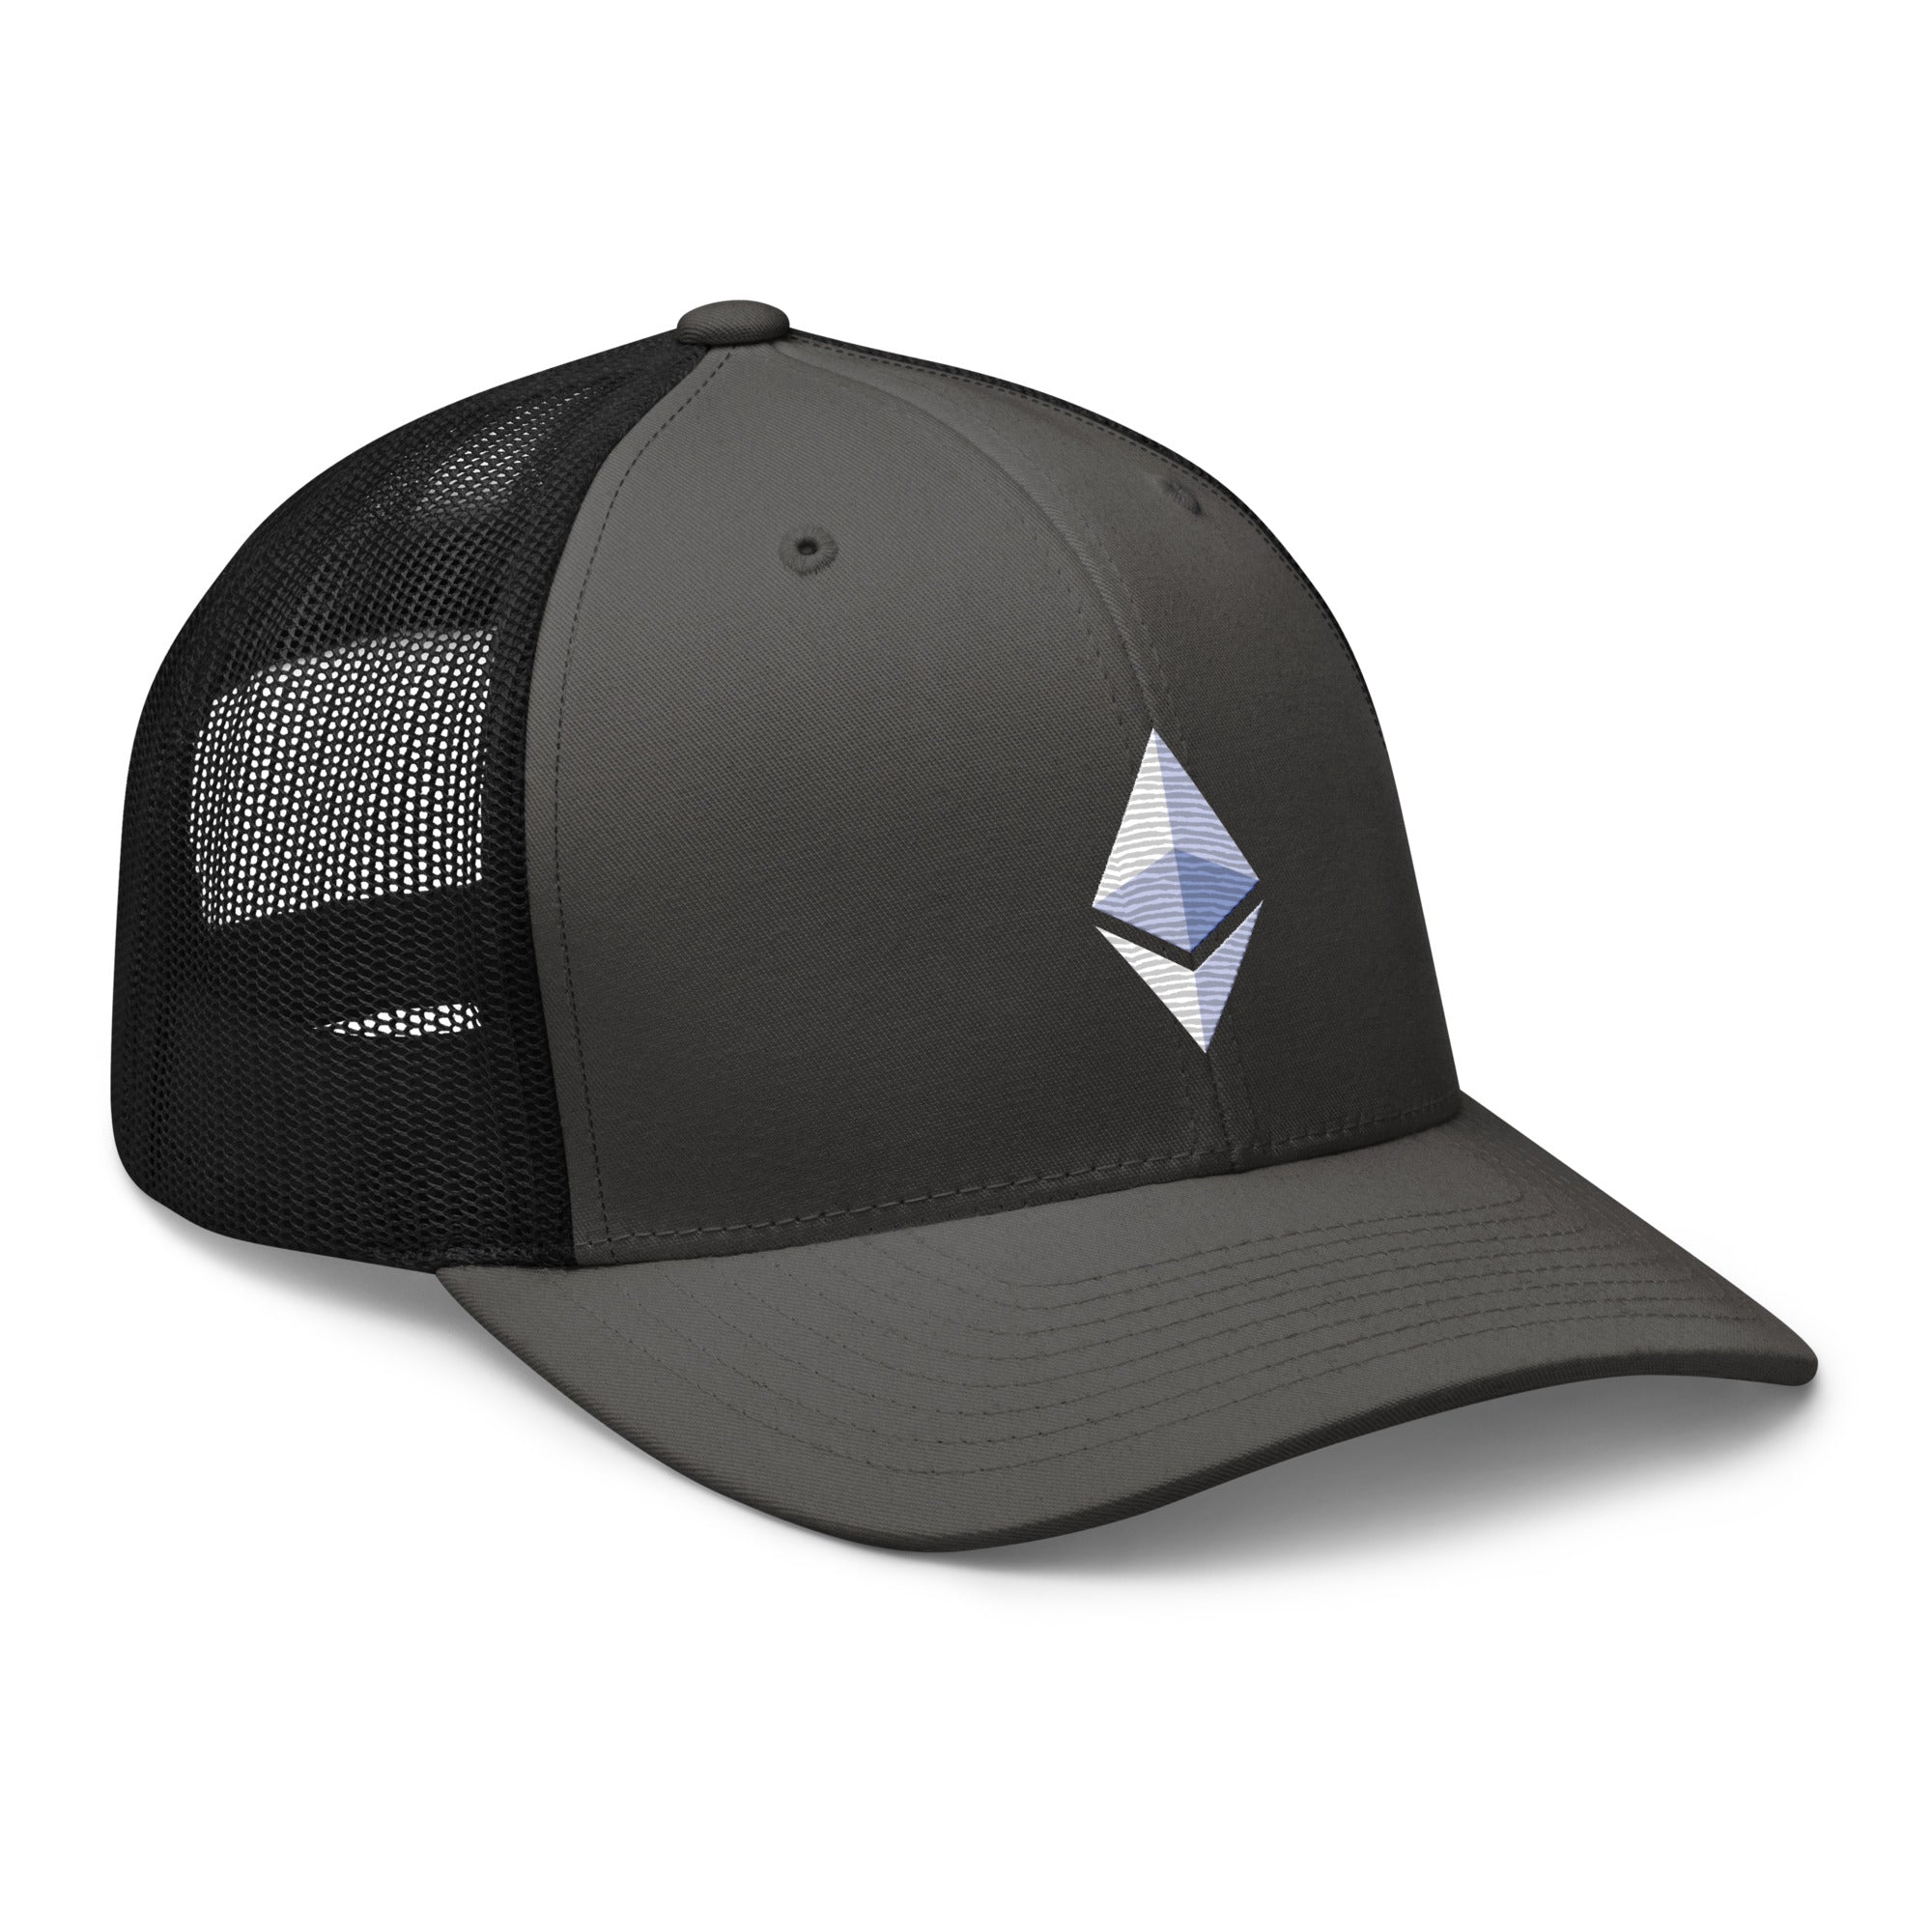 ETH Ethereum Cryptocurrency Symbol Trucker Cap Snapback Hat